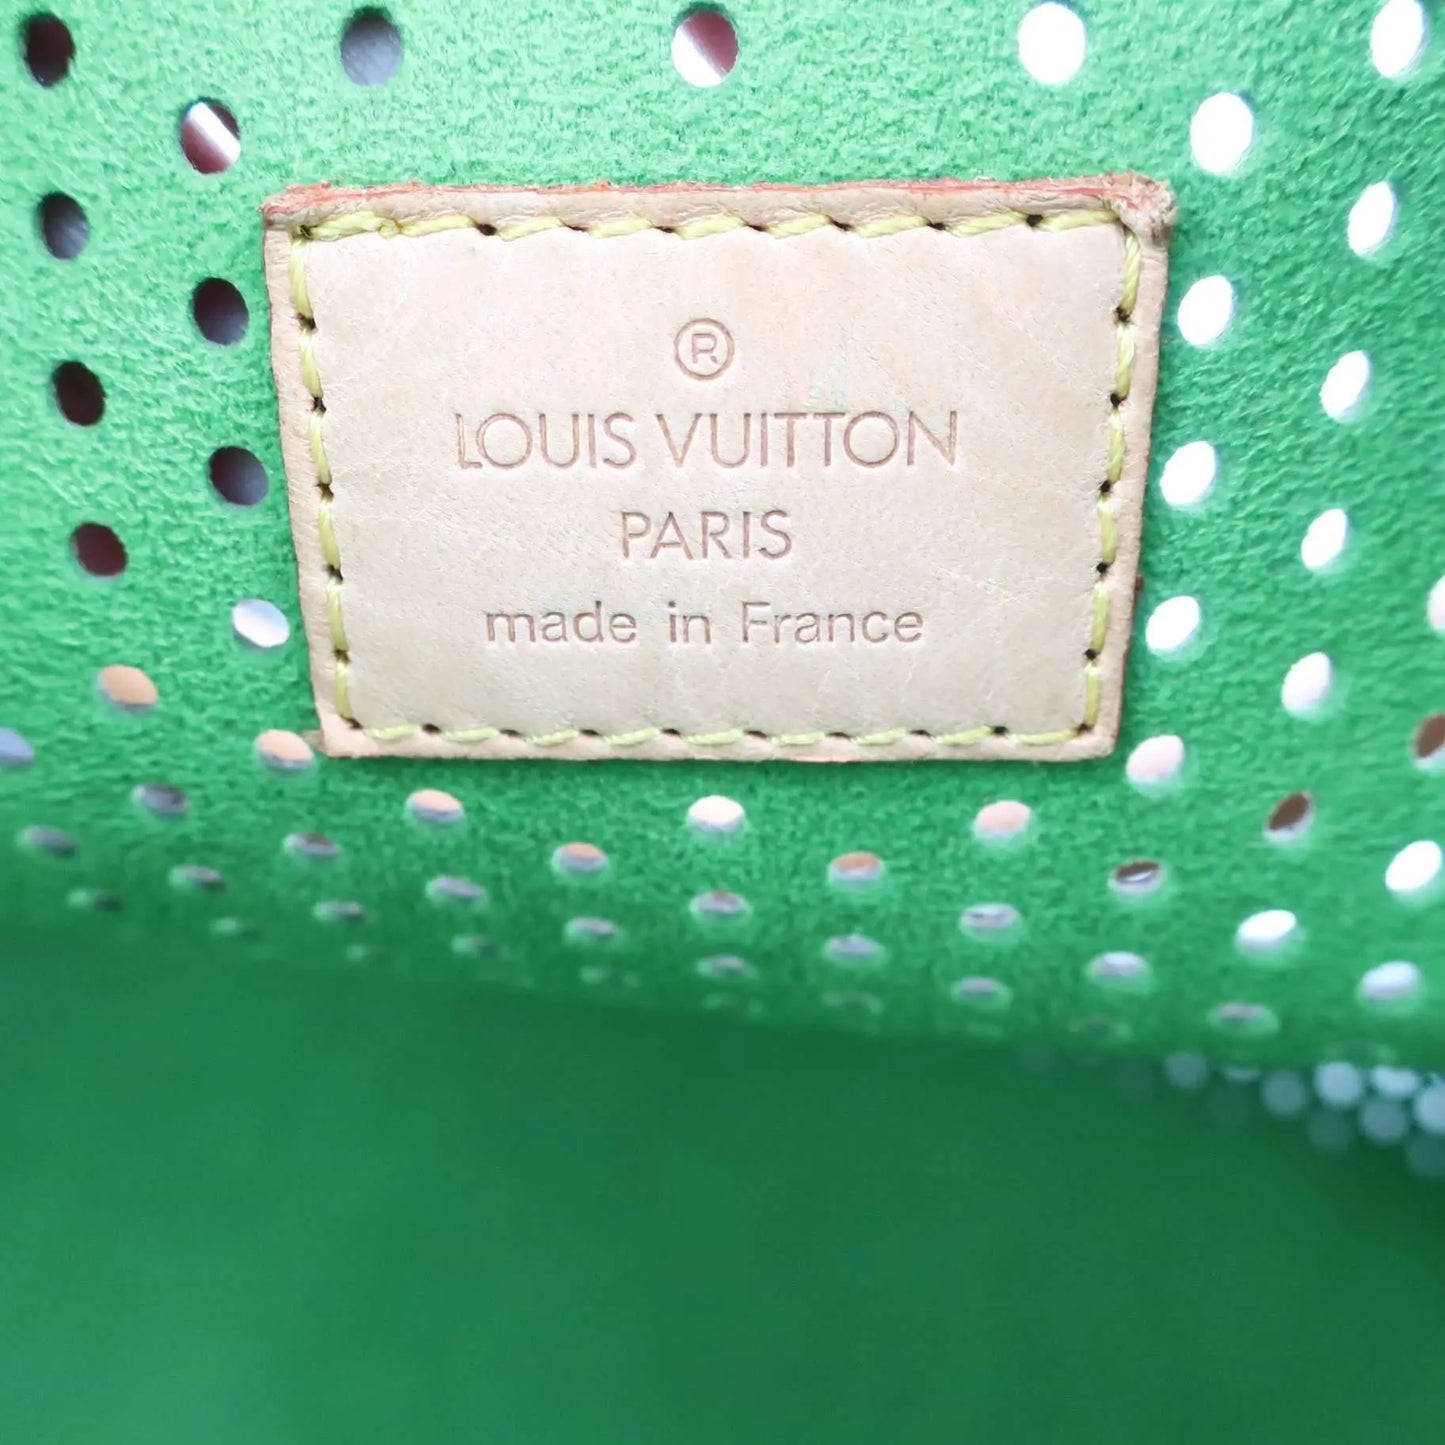 Louis Vuitton Perforated Speedy 30 Green Bag - ShopperBoard